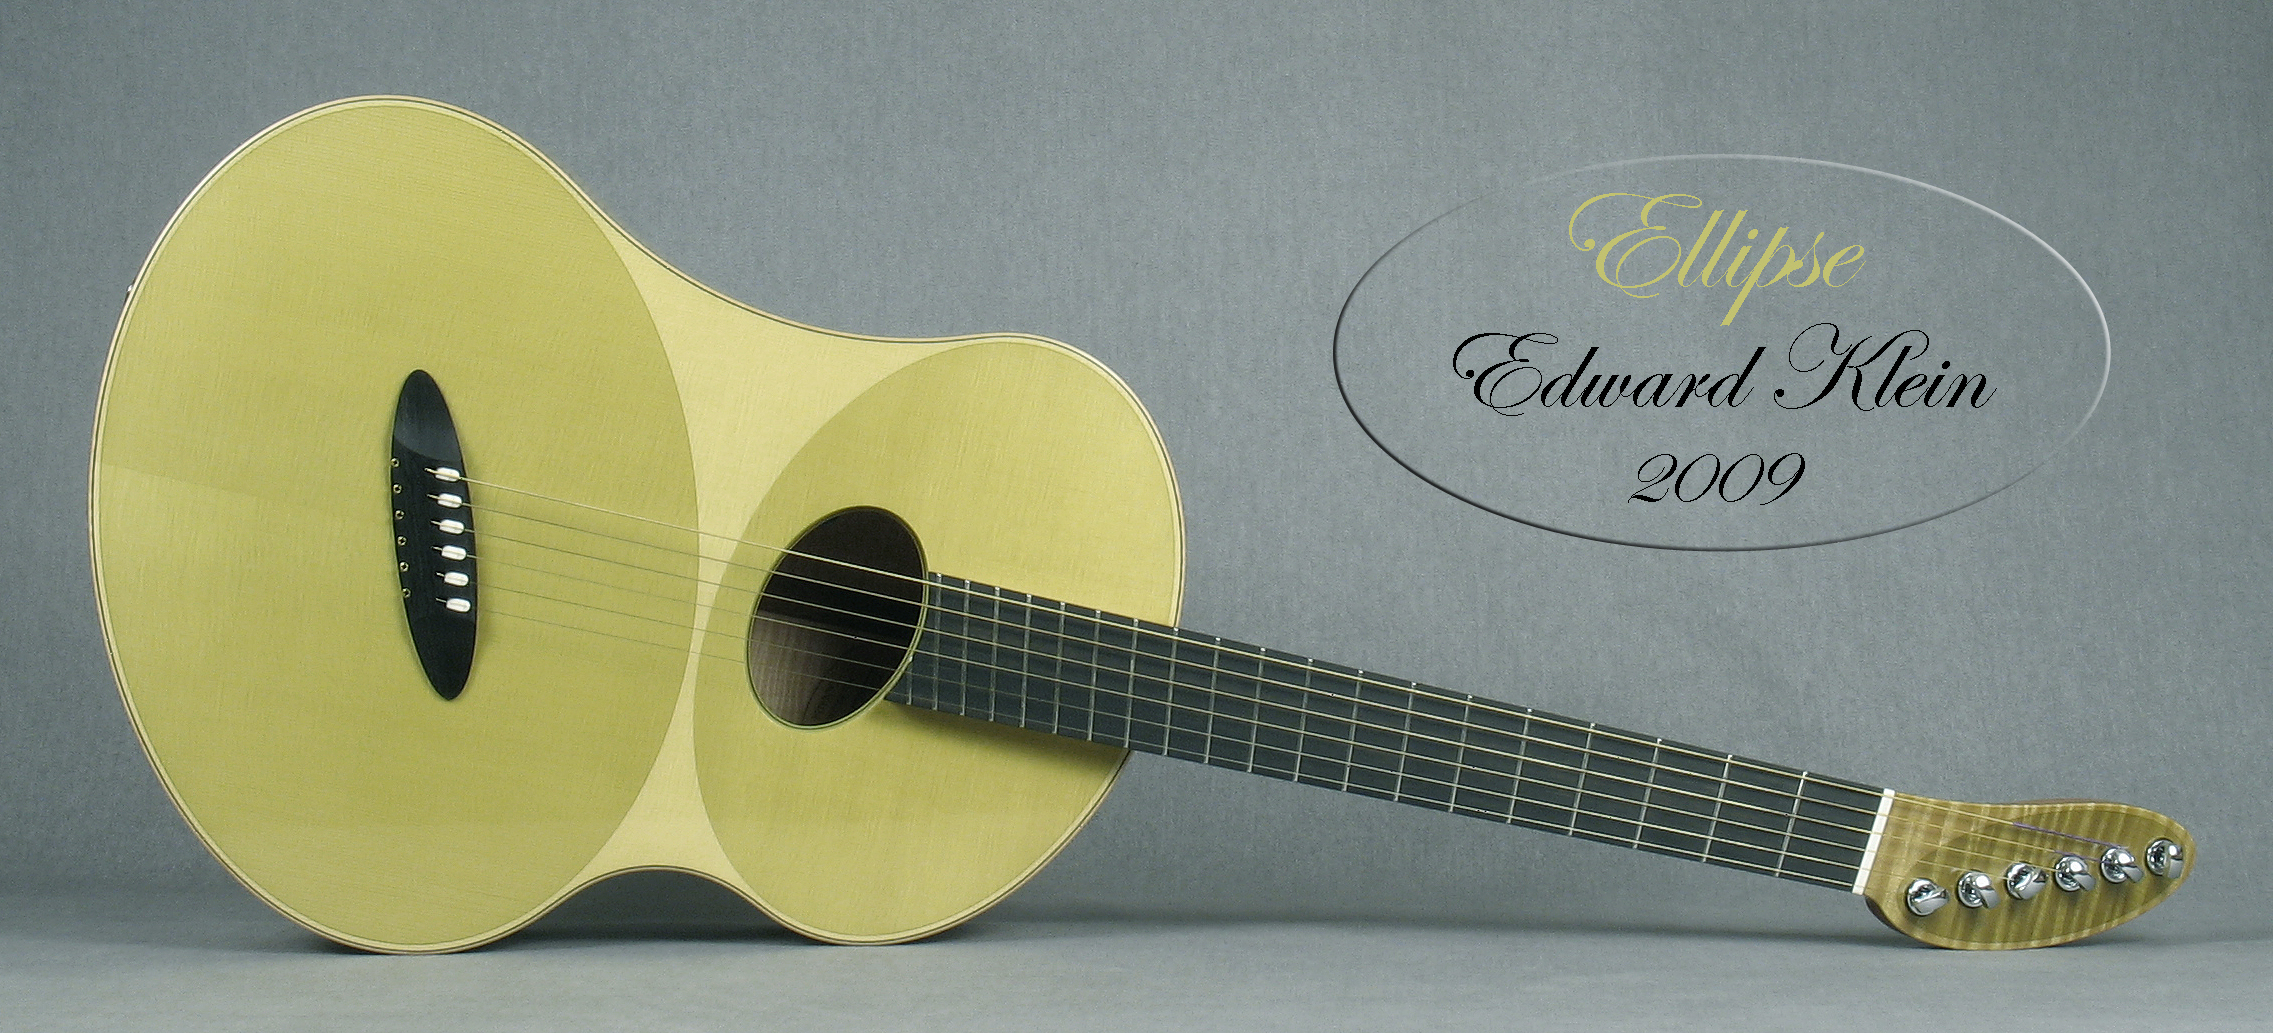 Original Ellipse concept guitar - refer to Ellipse N or Ellipse S as the current models available to order